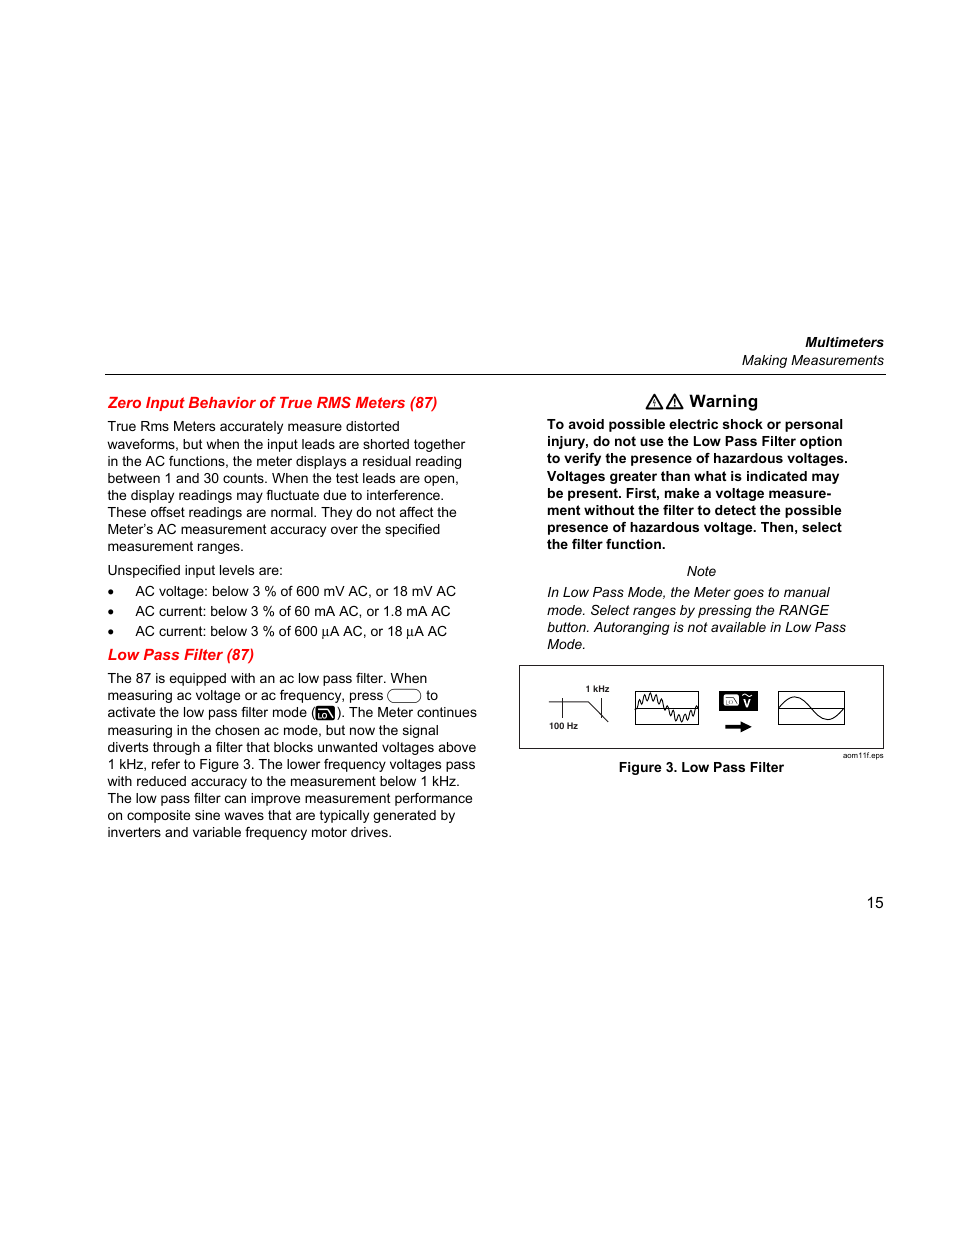 Zero input behavior of true rms meters (87), Low pass filter (87) | Fluke 87 V User Manual | Page 23 / 60